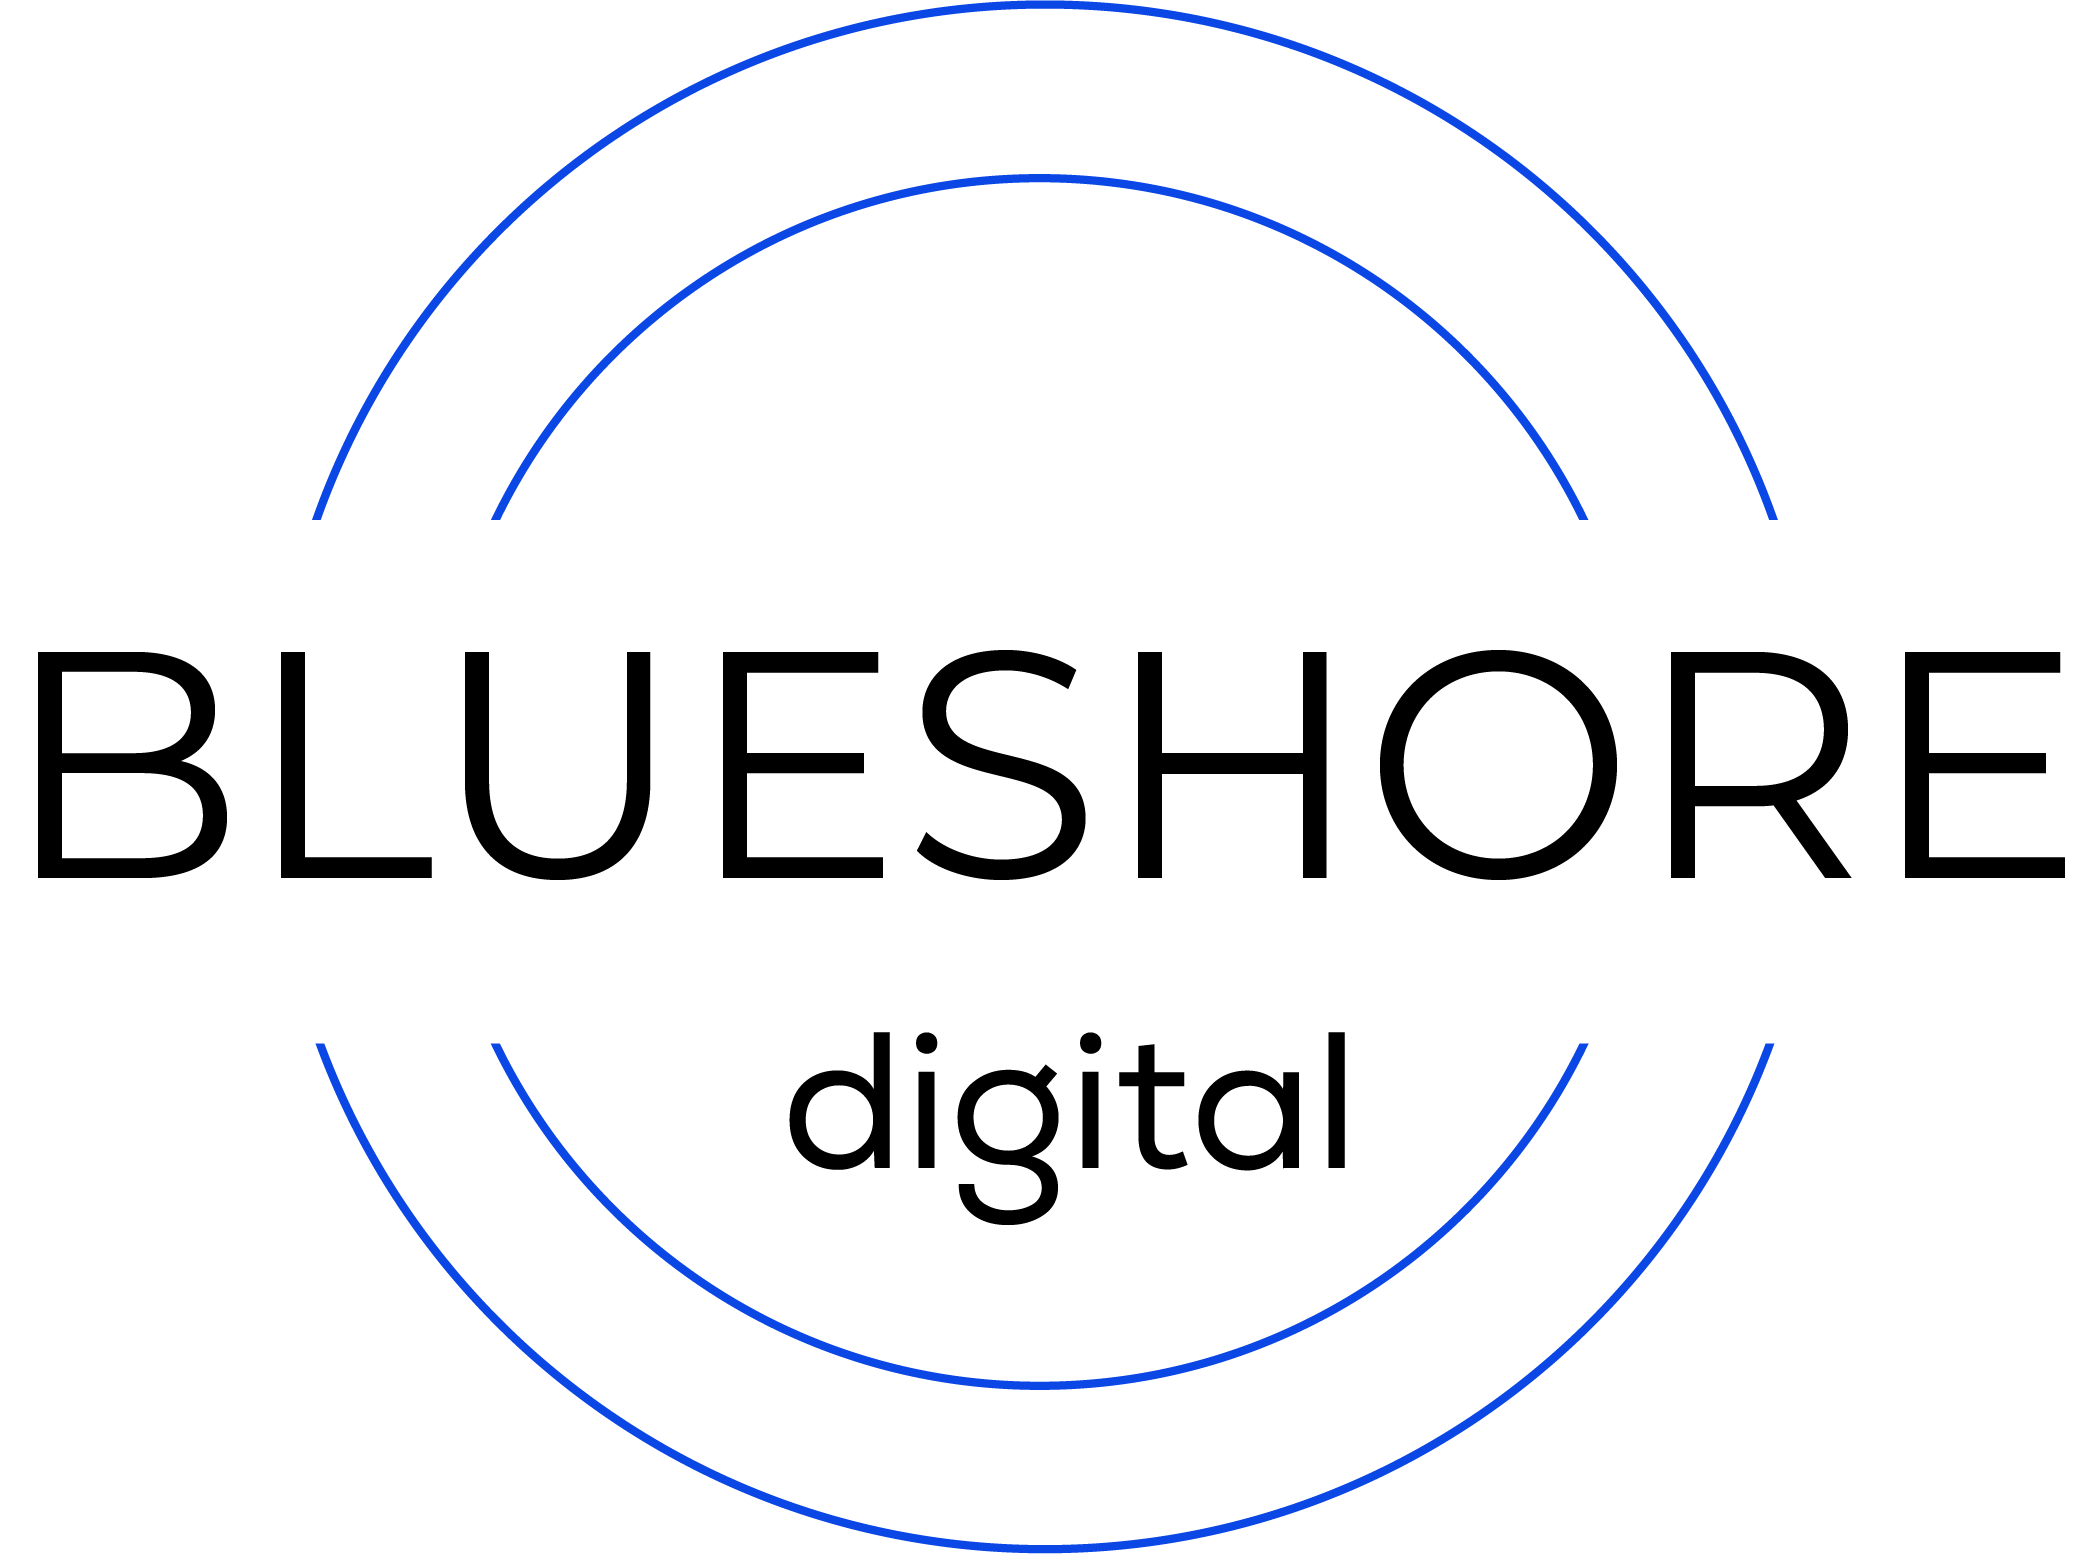 Blueshore digital logo